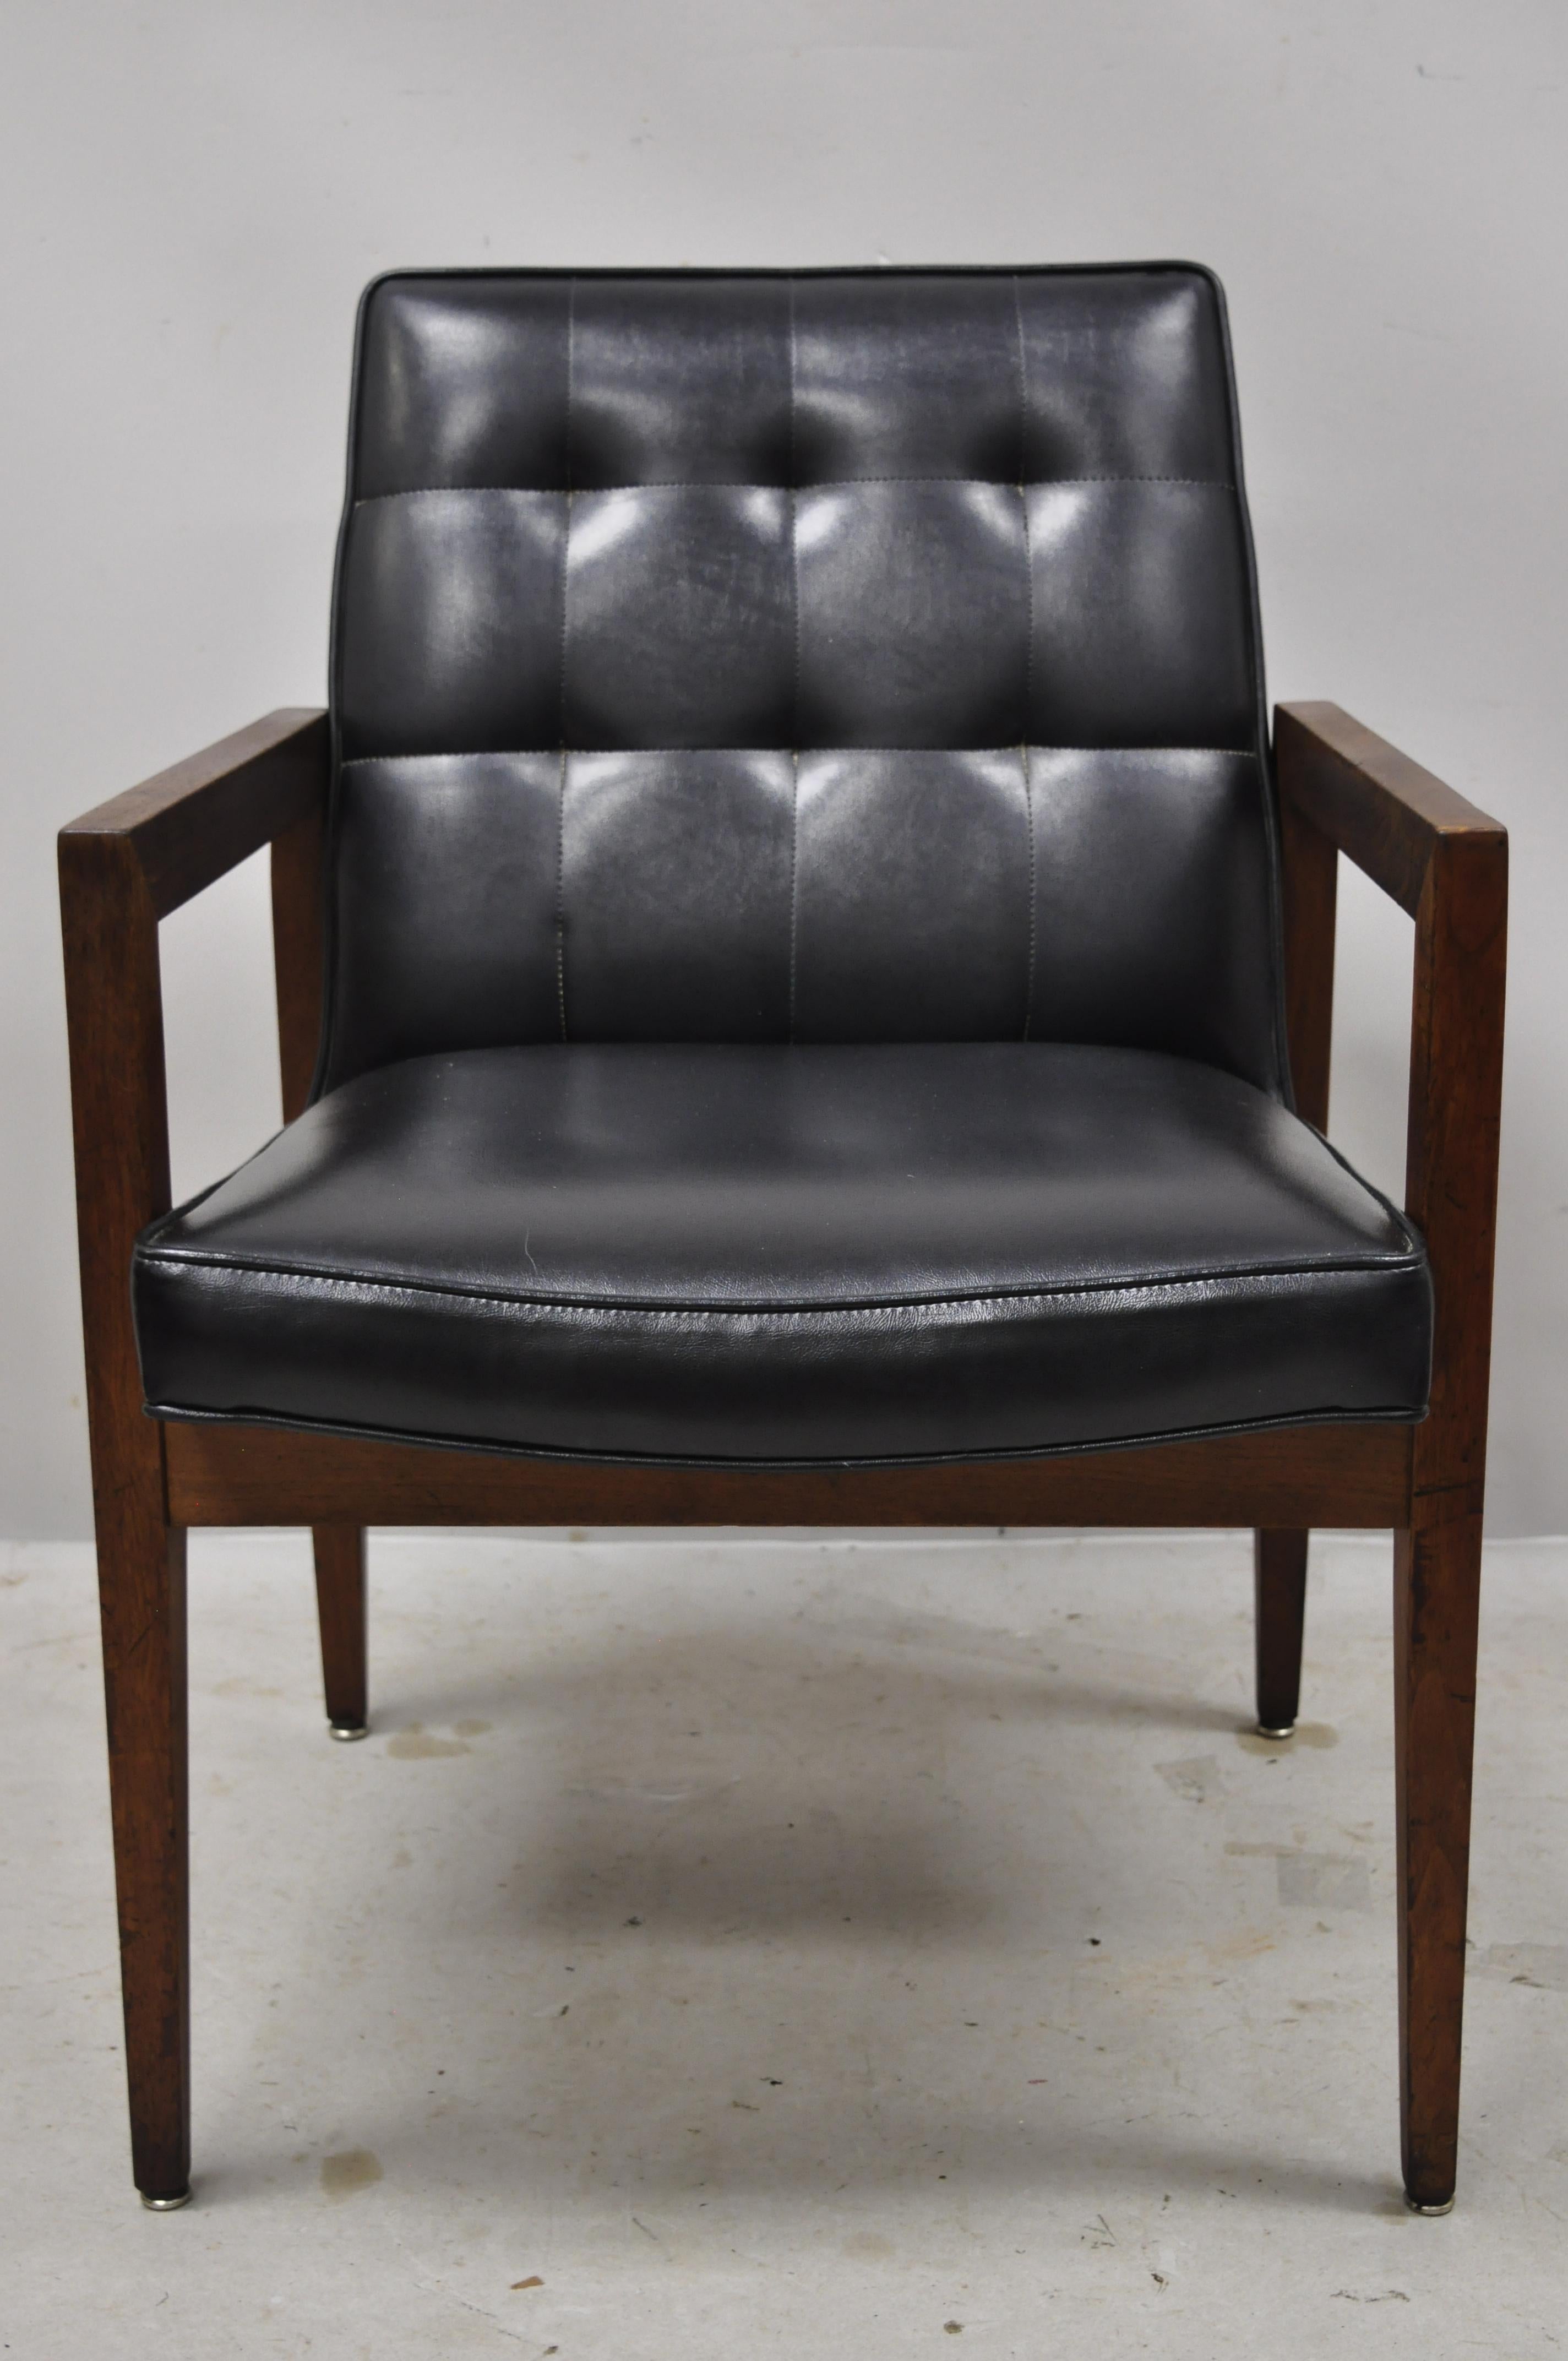 Vintage Mid-Century Modern Jens Risom style walnut black vinyl lounge armchair. Item features black tufted vinyl upholstery, solid wood frame, beautiful wood grain, very nice vintage item, clean modernist lines, quality American craftsmanship, great